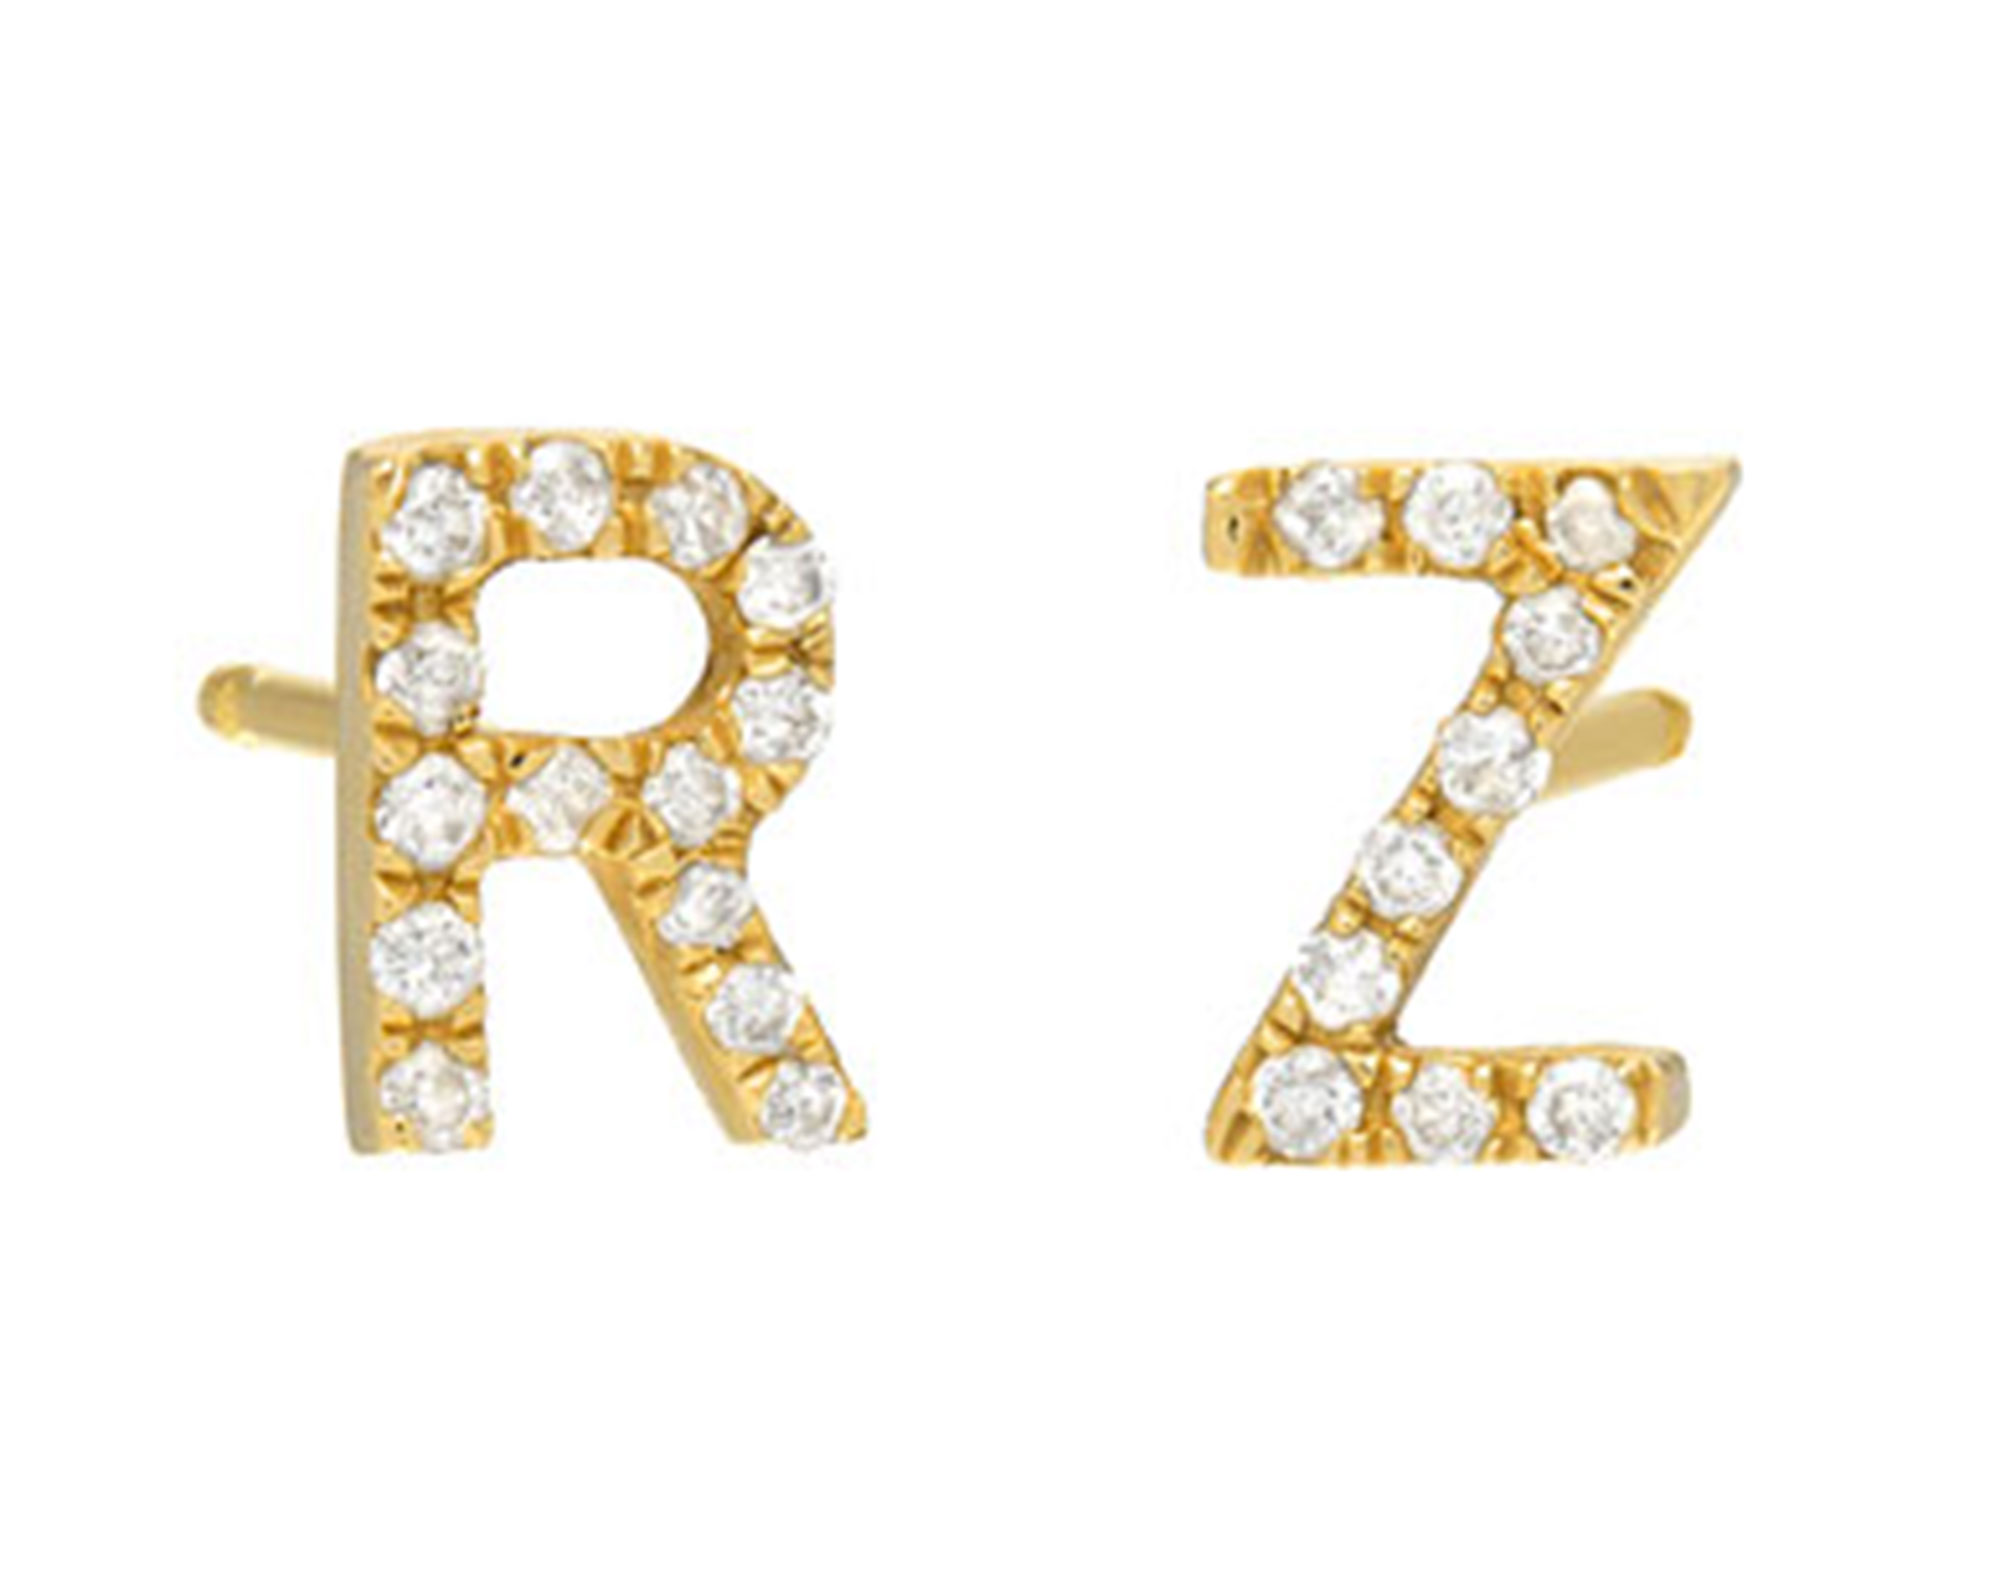 Personalized Initial Earrings, Hoops Inspired by Jennifer Lopez | UsWeekly